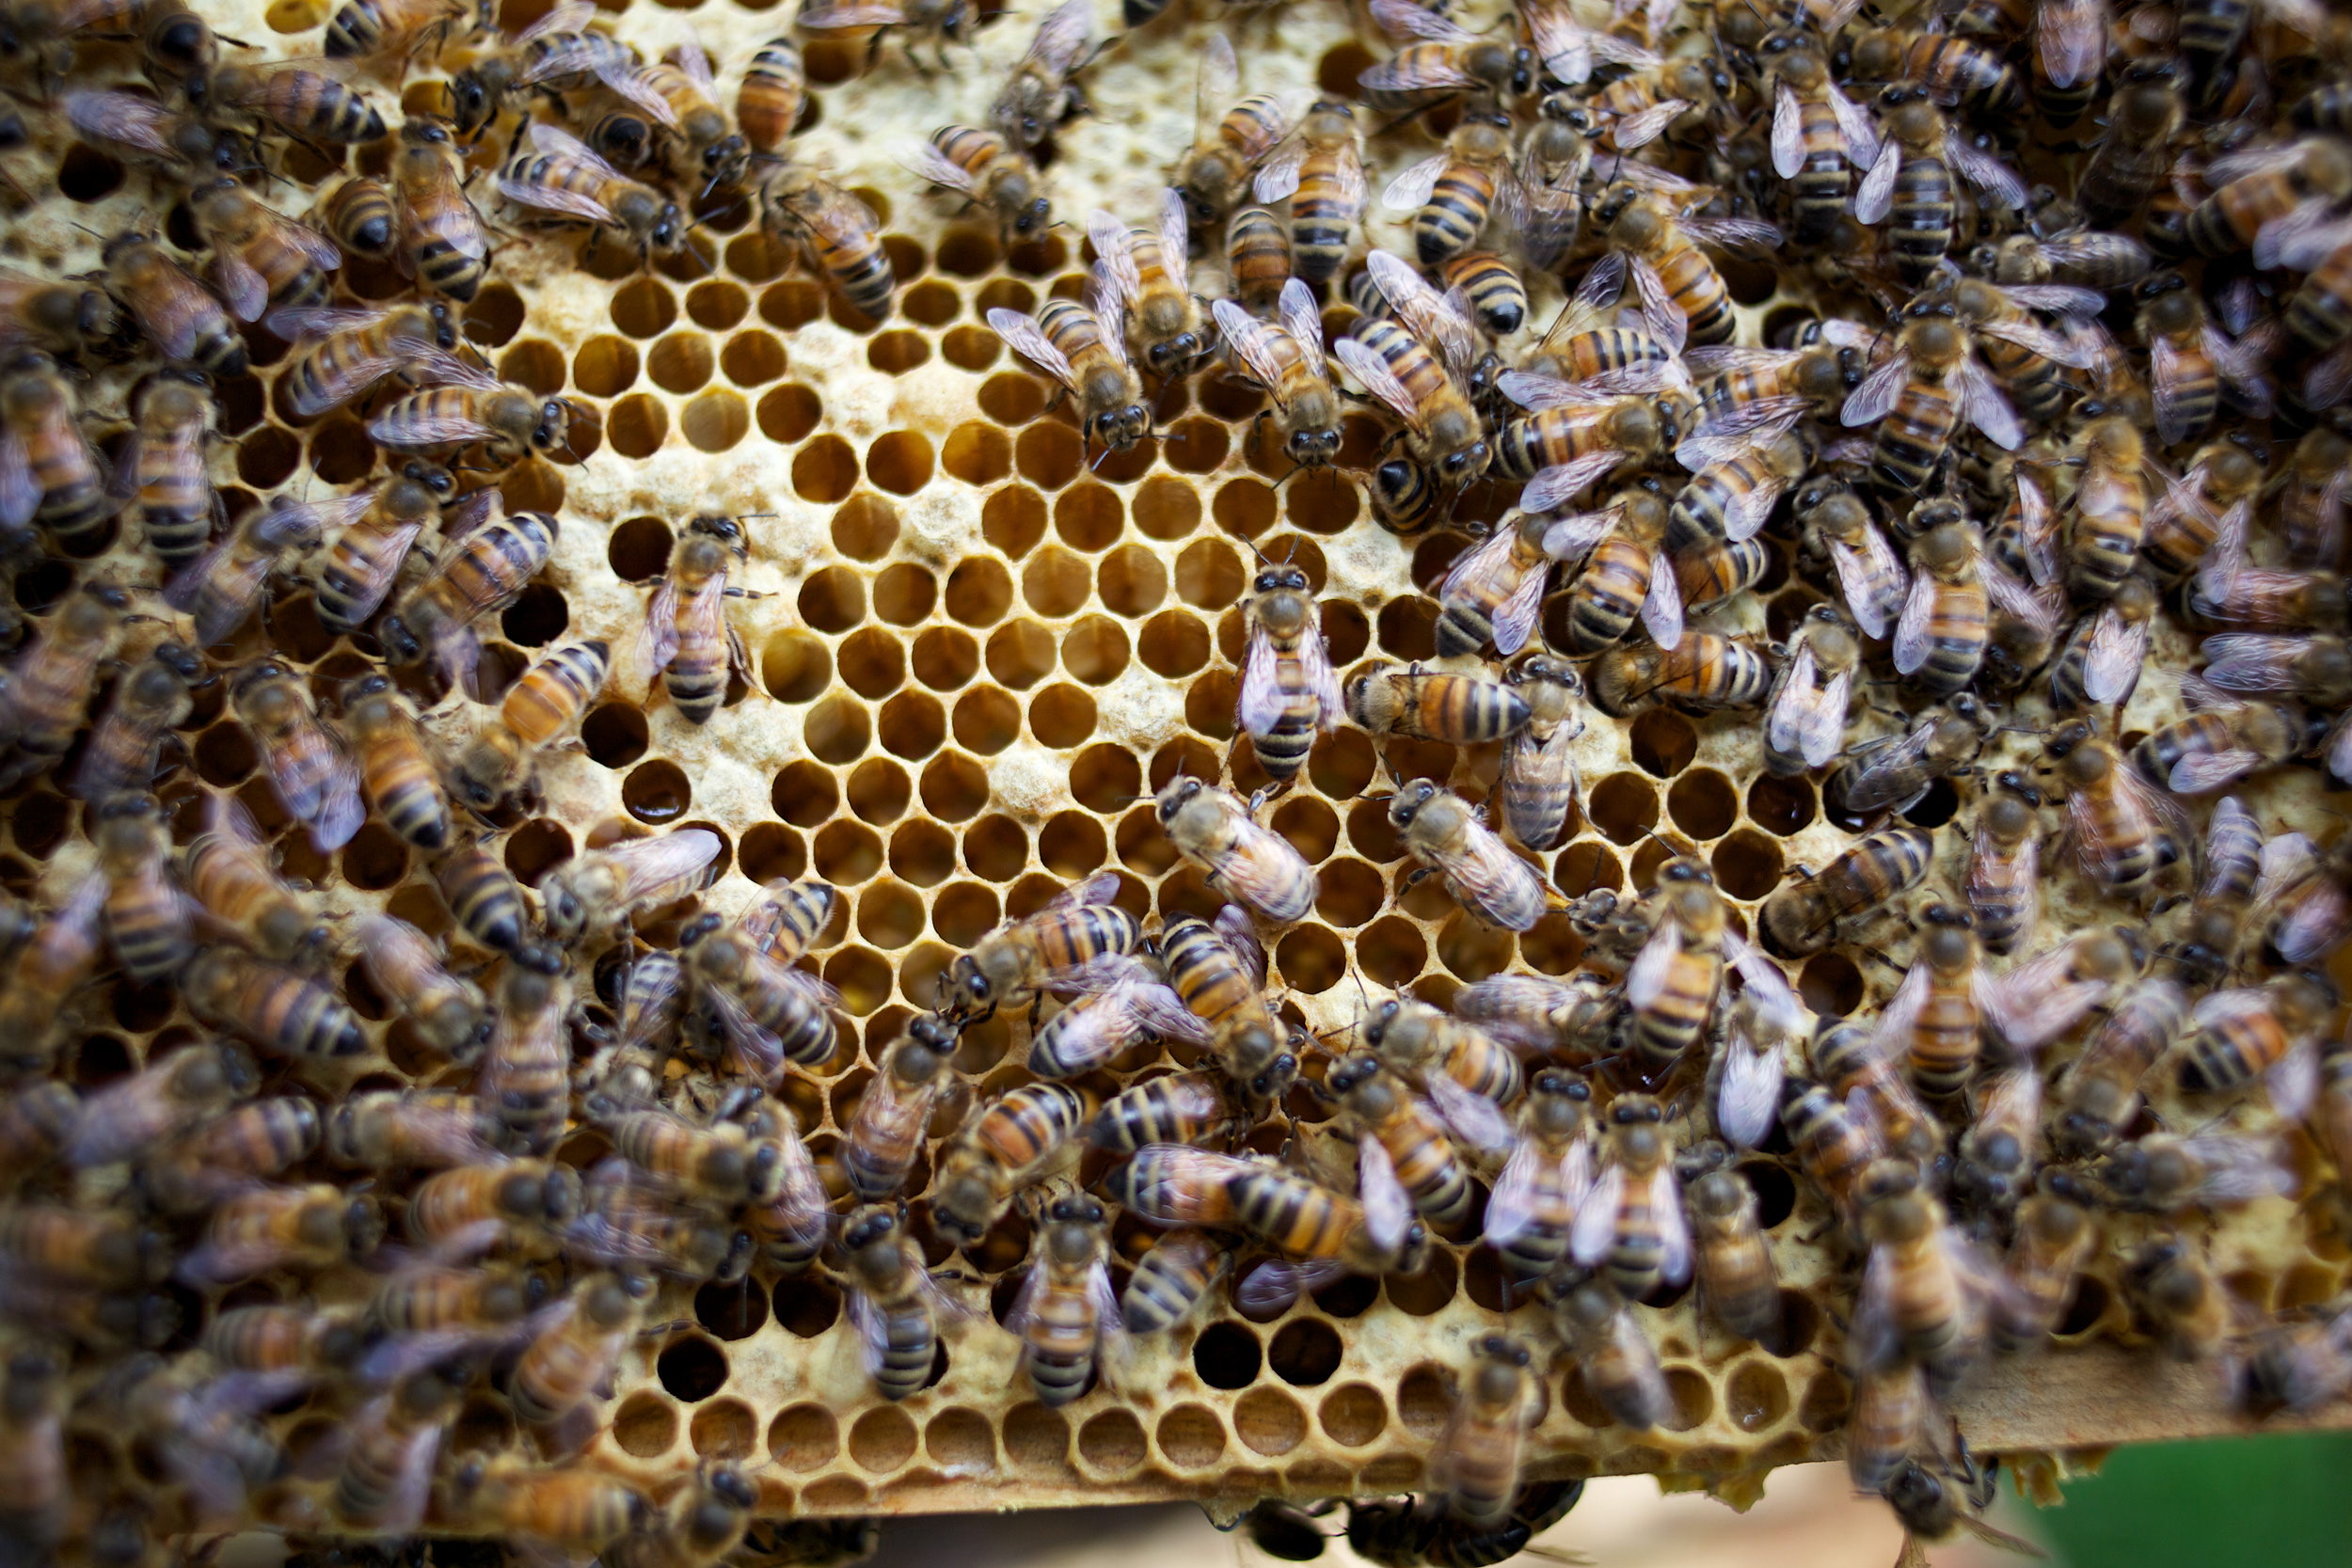 bees-camilla-goddard-katie-hyams-reportage-03.jpg